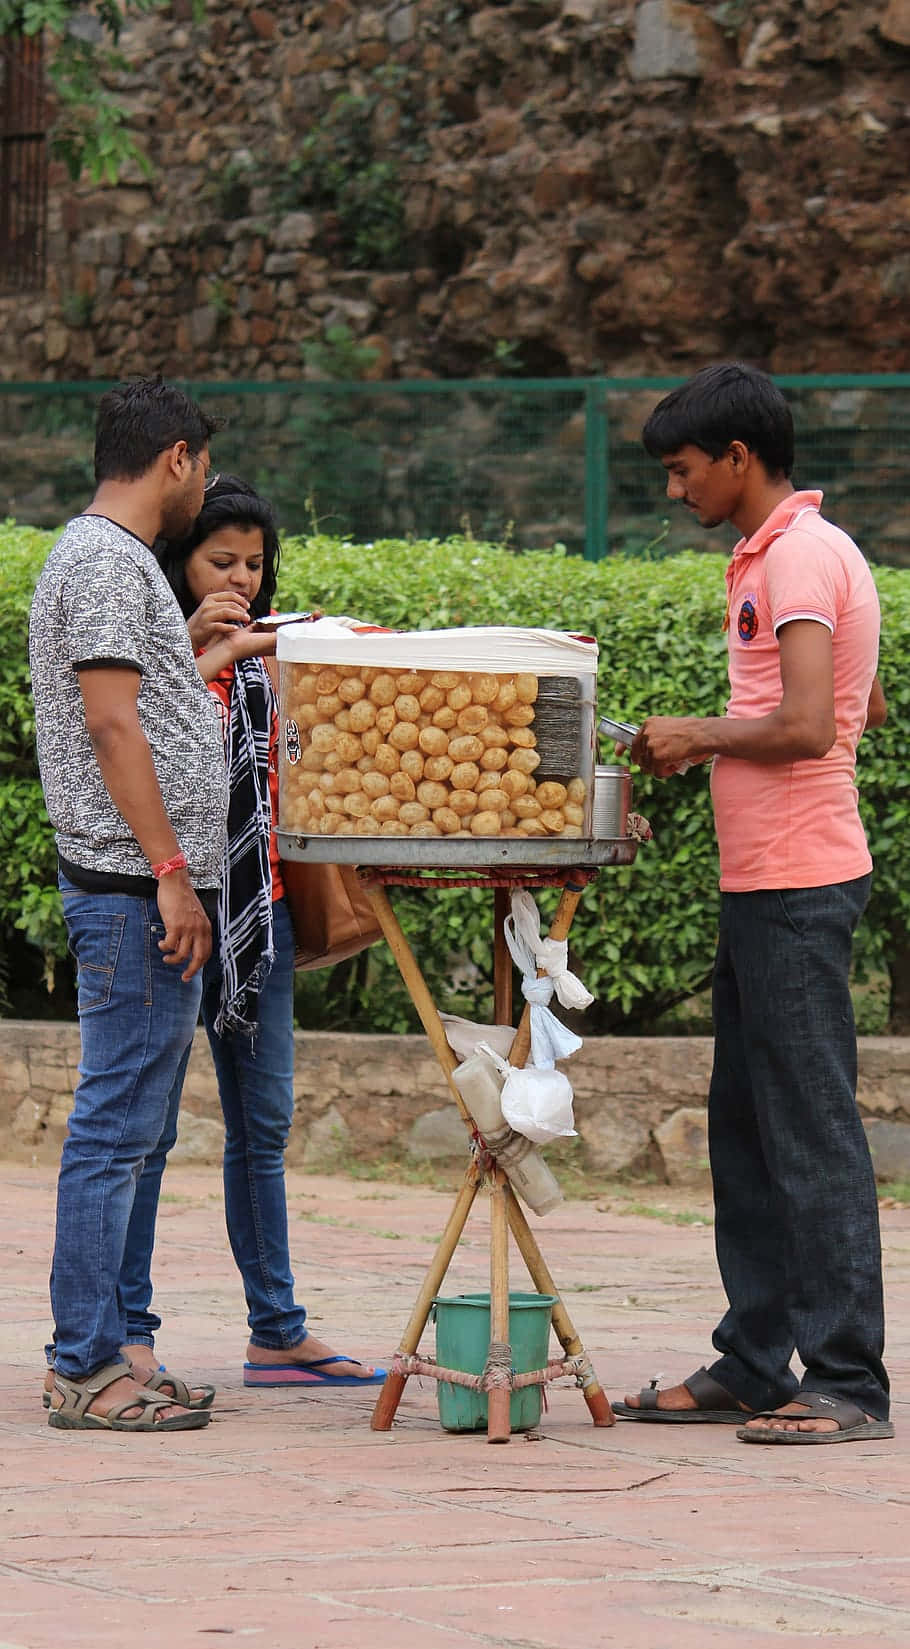 Indian Street Food - Pani Puri Vendor Background